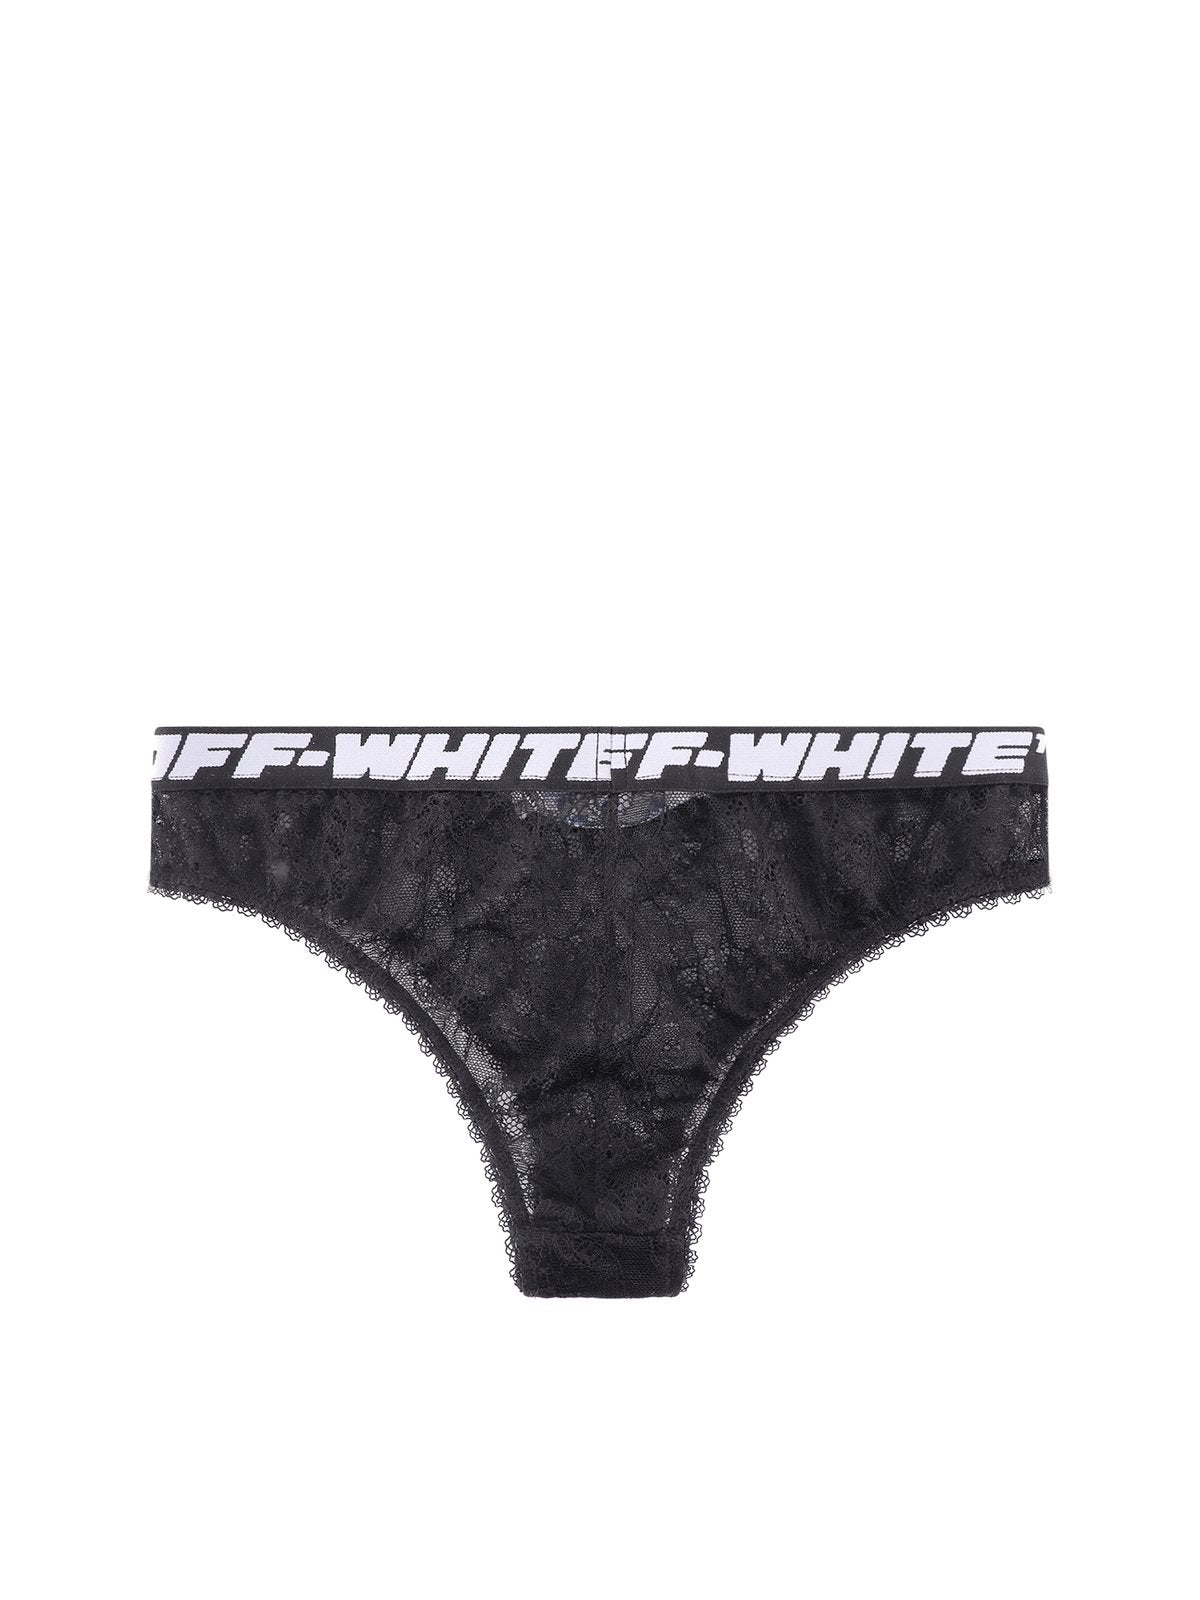 Off-White Logo Waistband Lace Briefs